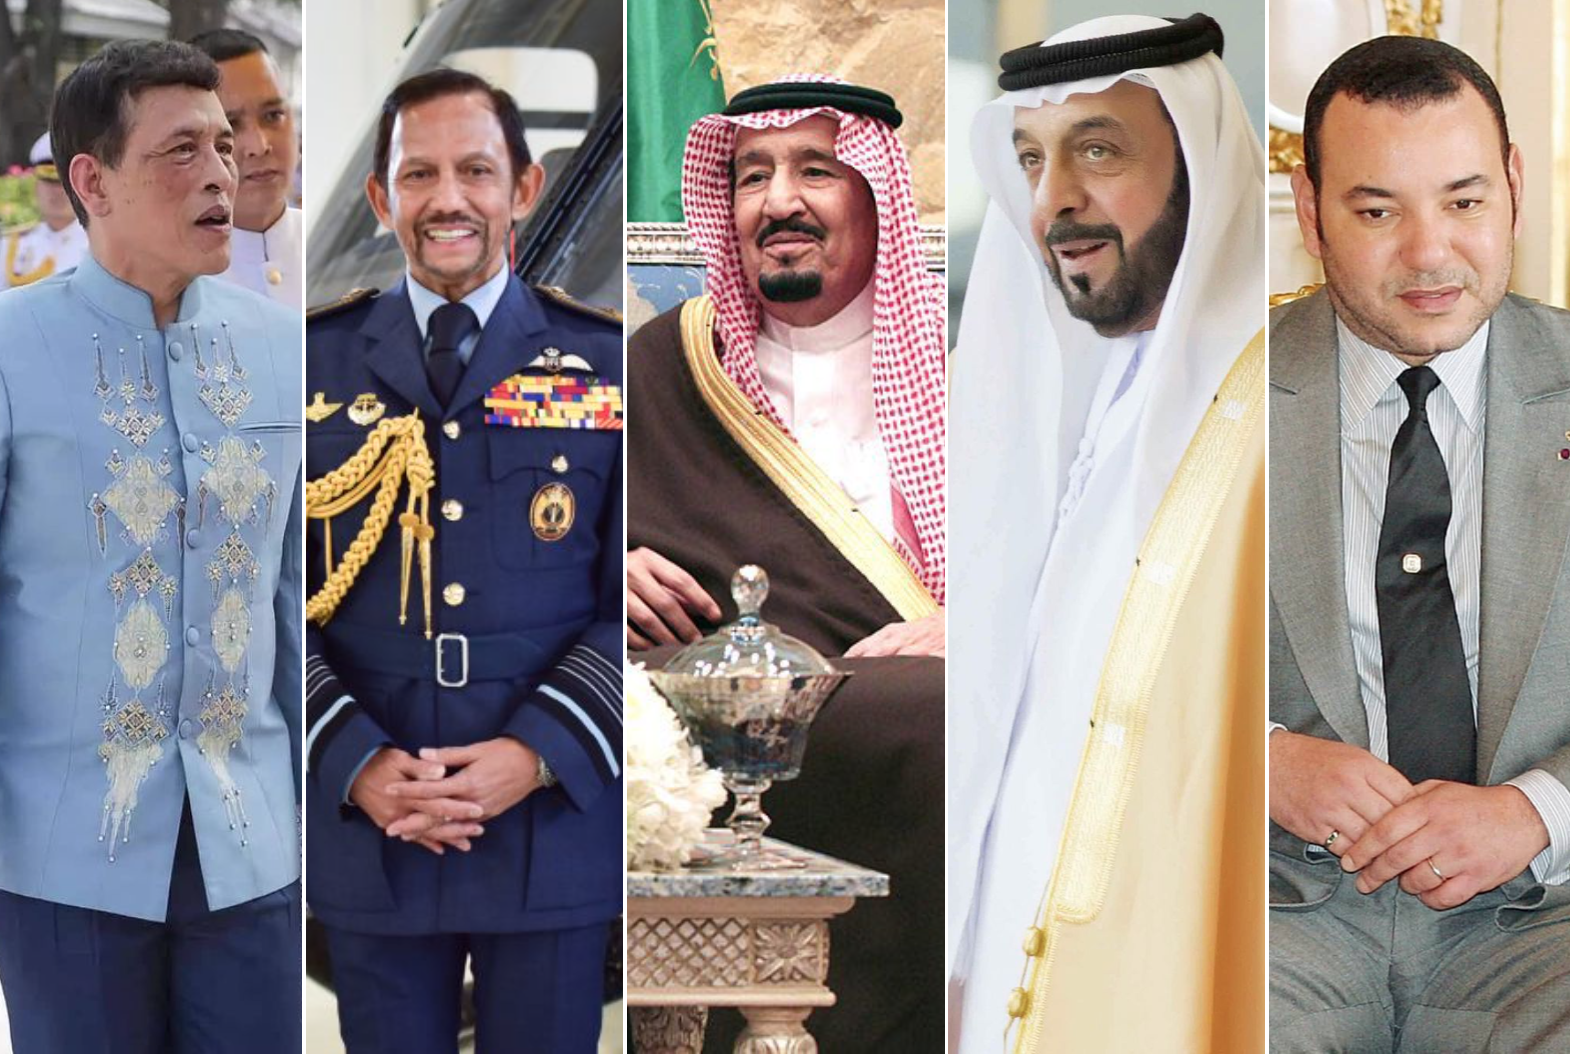 King Vajiralongkorn, Sultan Hassanal Bolkiah, King Salman bin Abdulaziz Al Saud, Sheikh Khalifa bin Zayed Al Nahyan and King Mohammed VI. Photo: @TildaAng, @nurlhaqchaniago, @AviKaner/Twitter, @kb_zayed, @le_roi_mohammed_6/Instagram